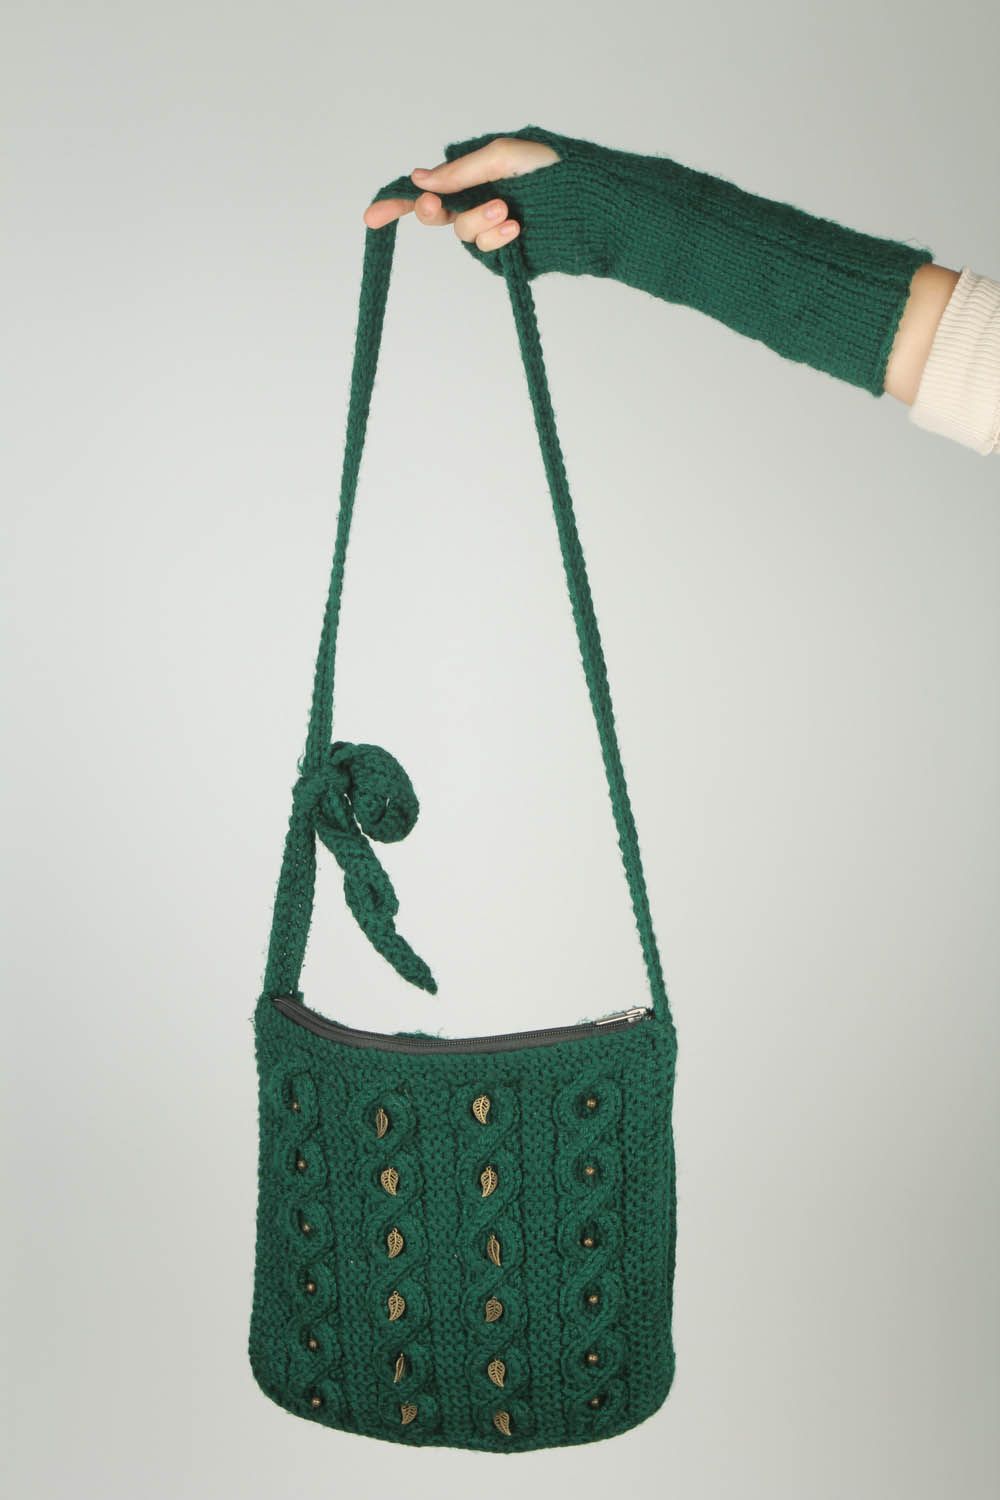 Crochet purse and oversleeves photo 2